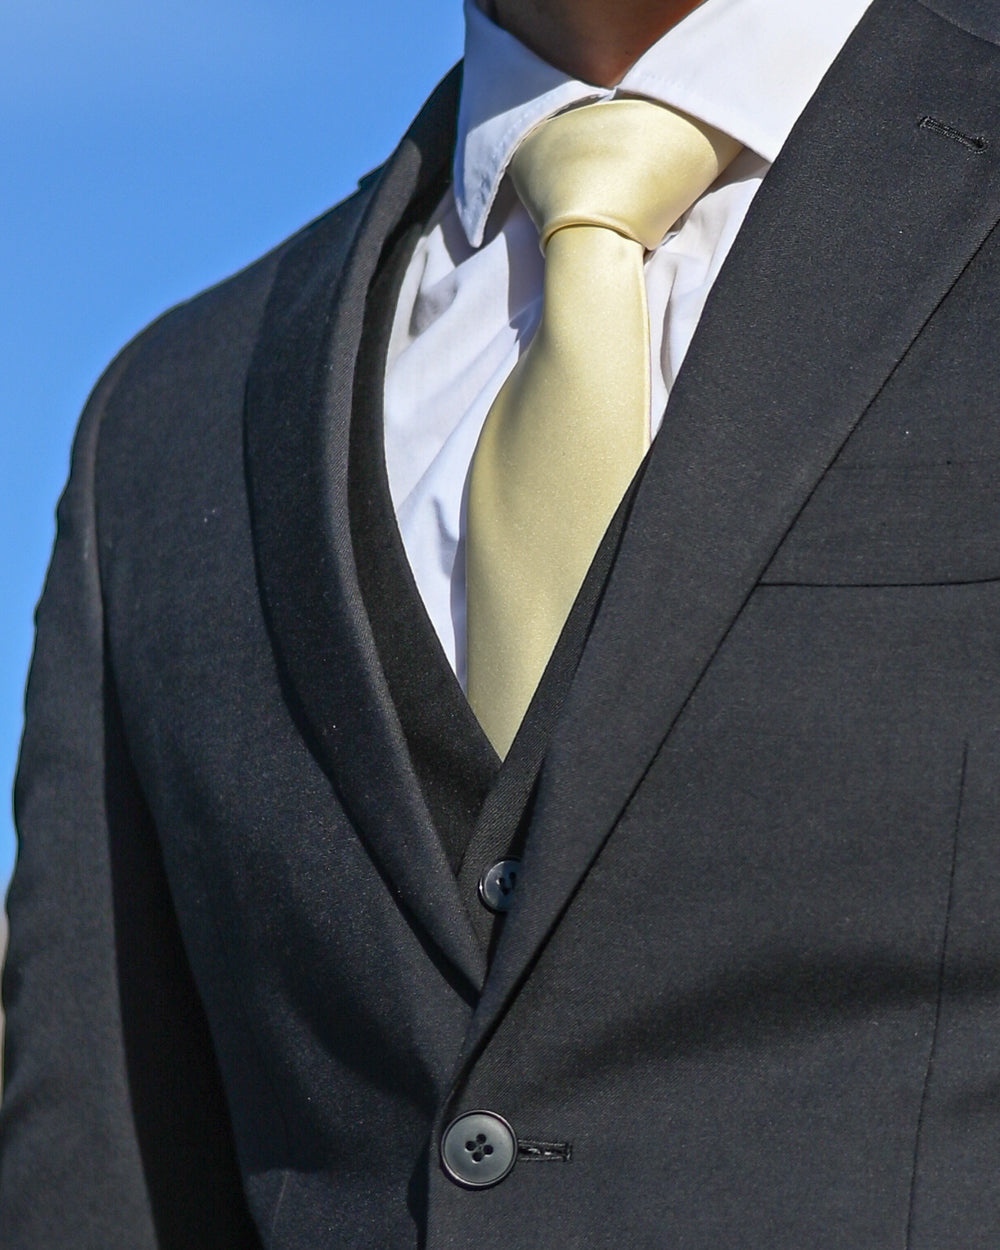 Gold silk-look tie worn with a black three-piece suit